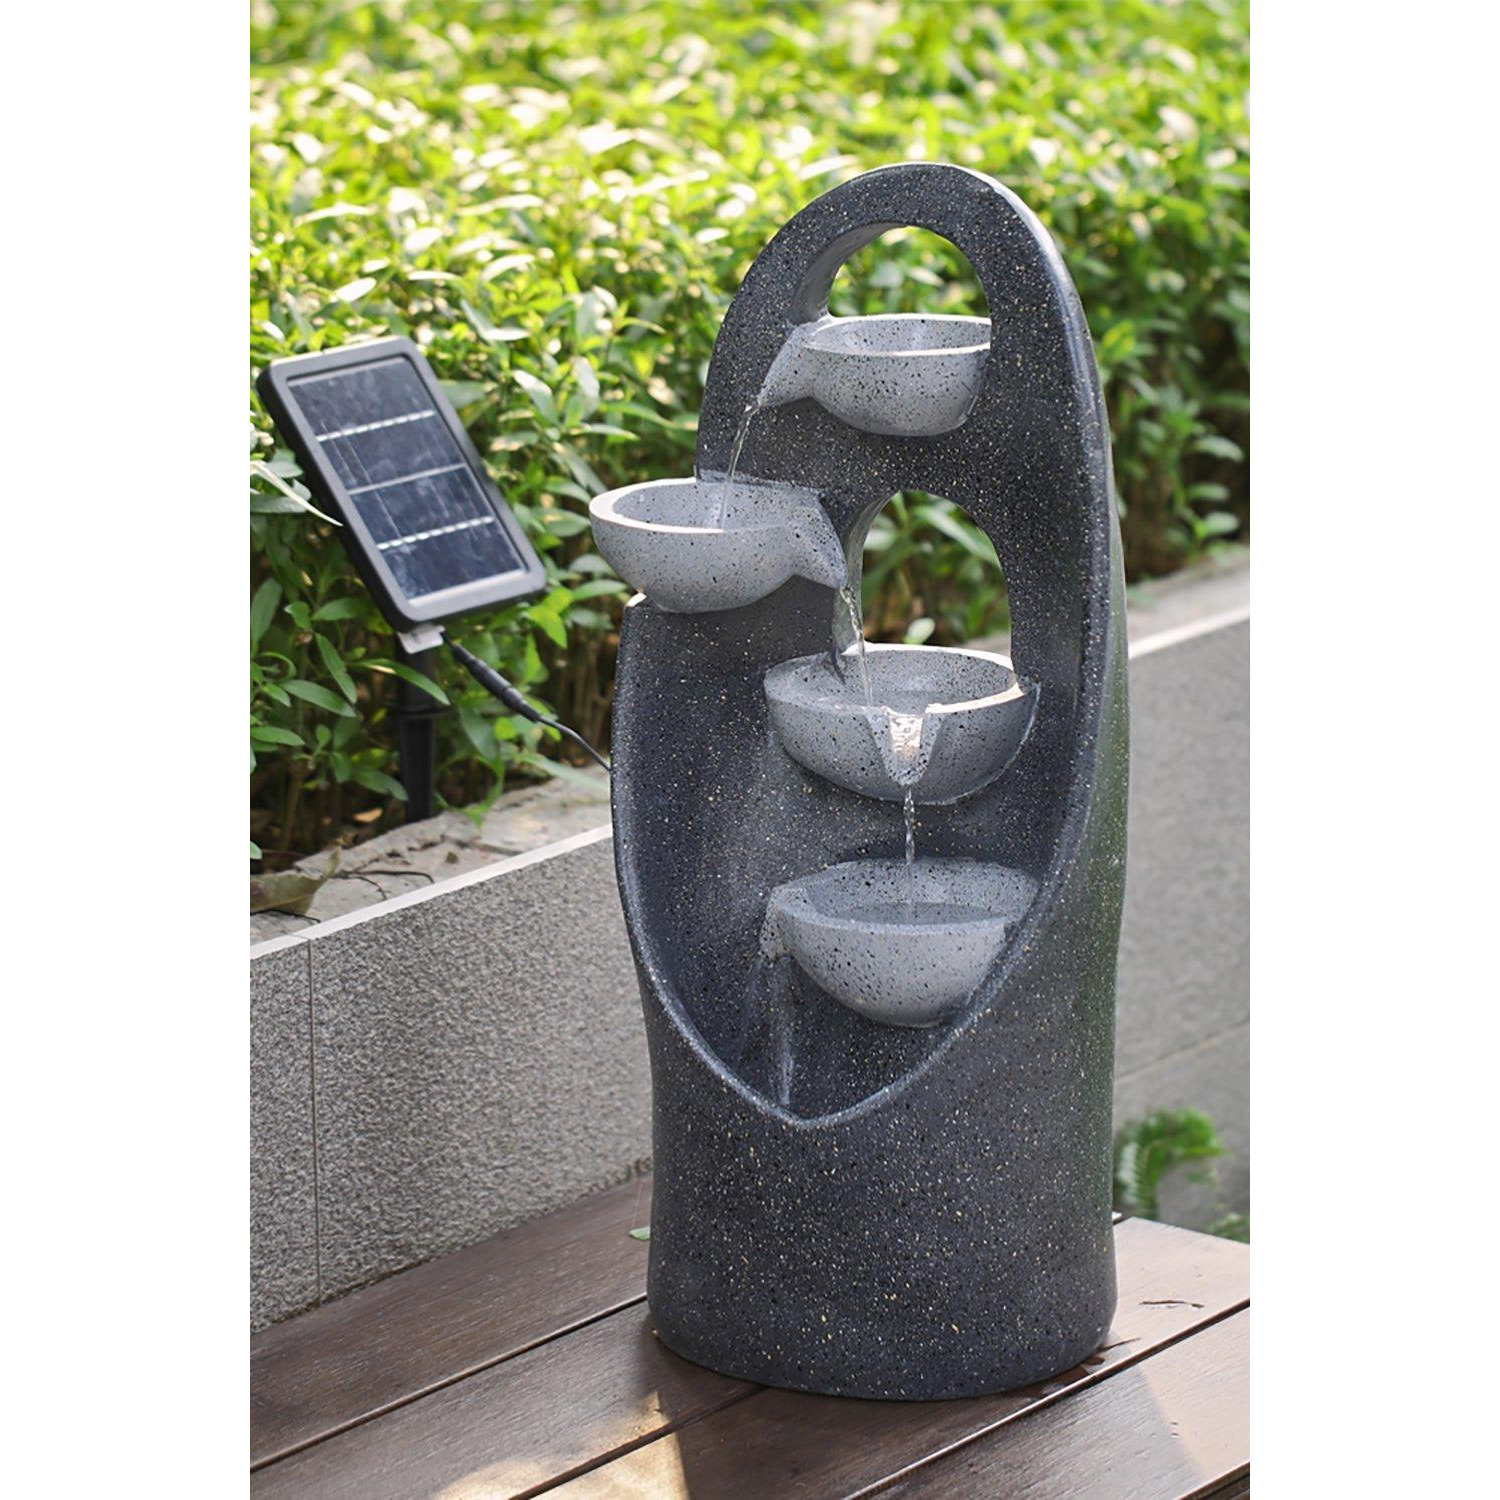 4-Tier Solar Powered Garden Water Fountain - image 1